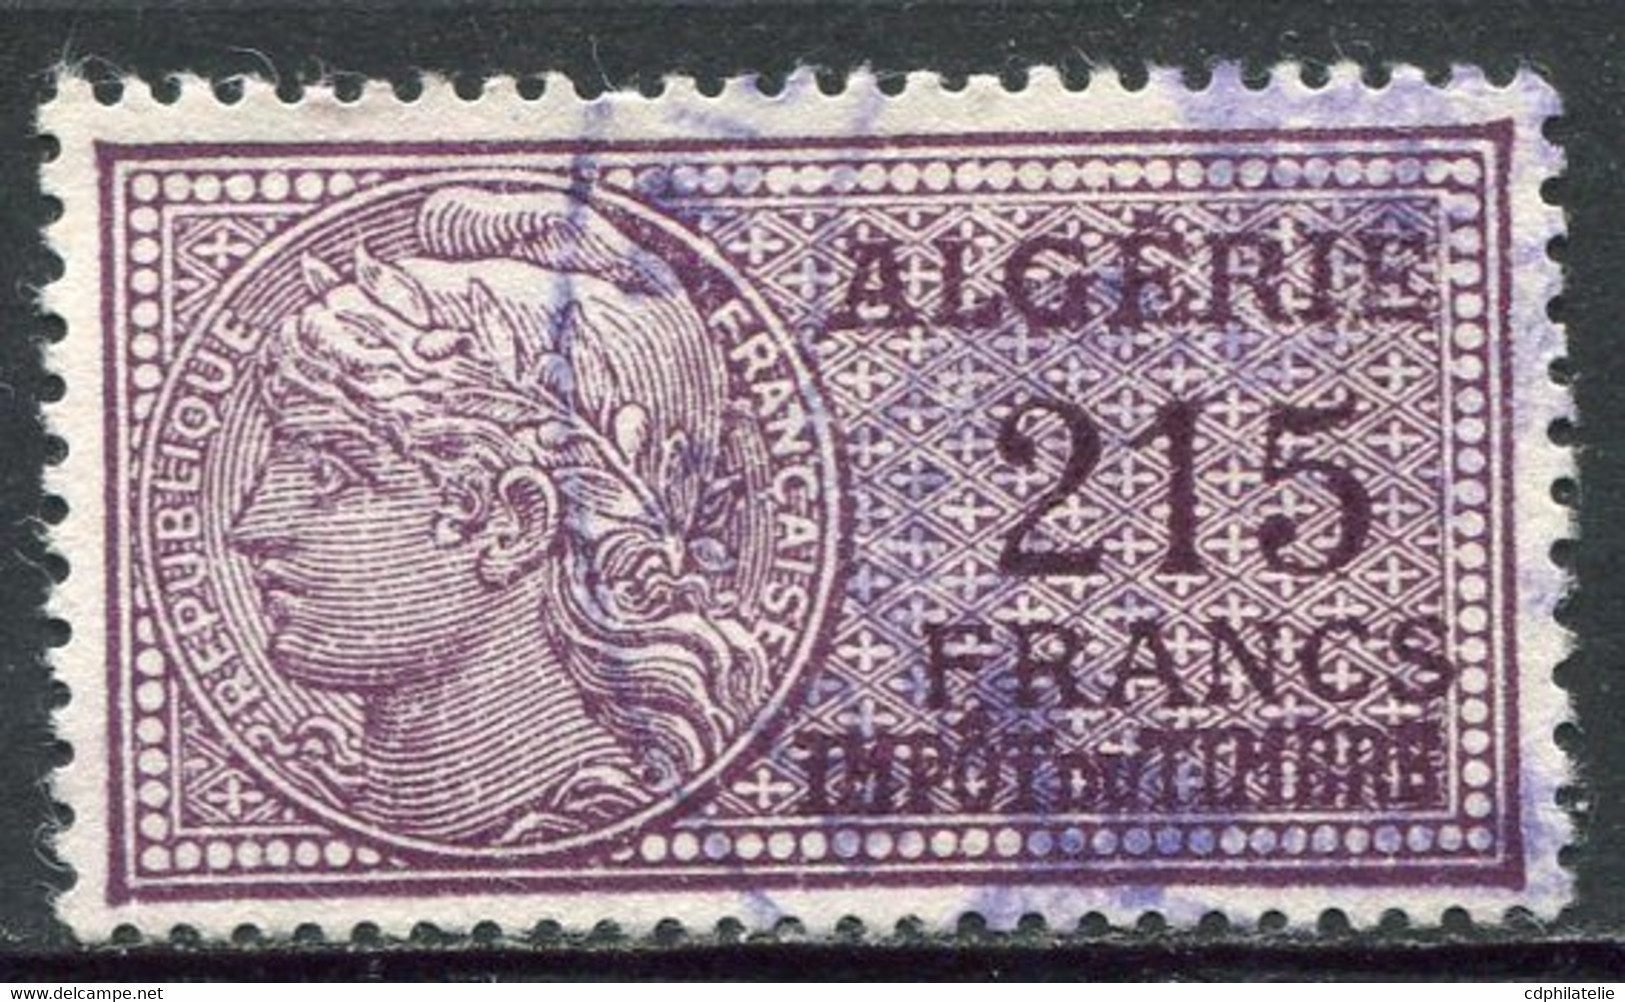 ALGERIE TIMBRE FISCAL OBLITERE  " ALGERIE  215 FRANCS IMPOT DU TIMBRE " - Used Stamps